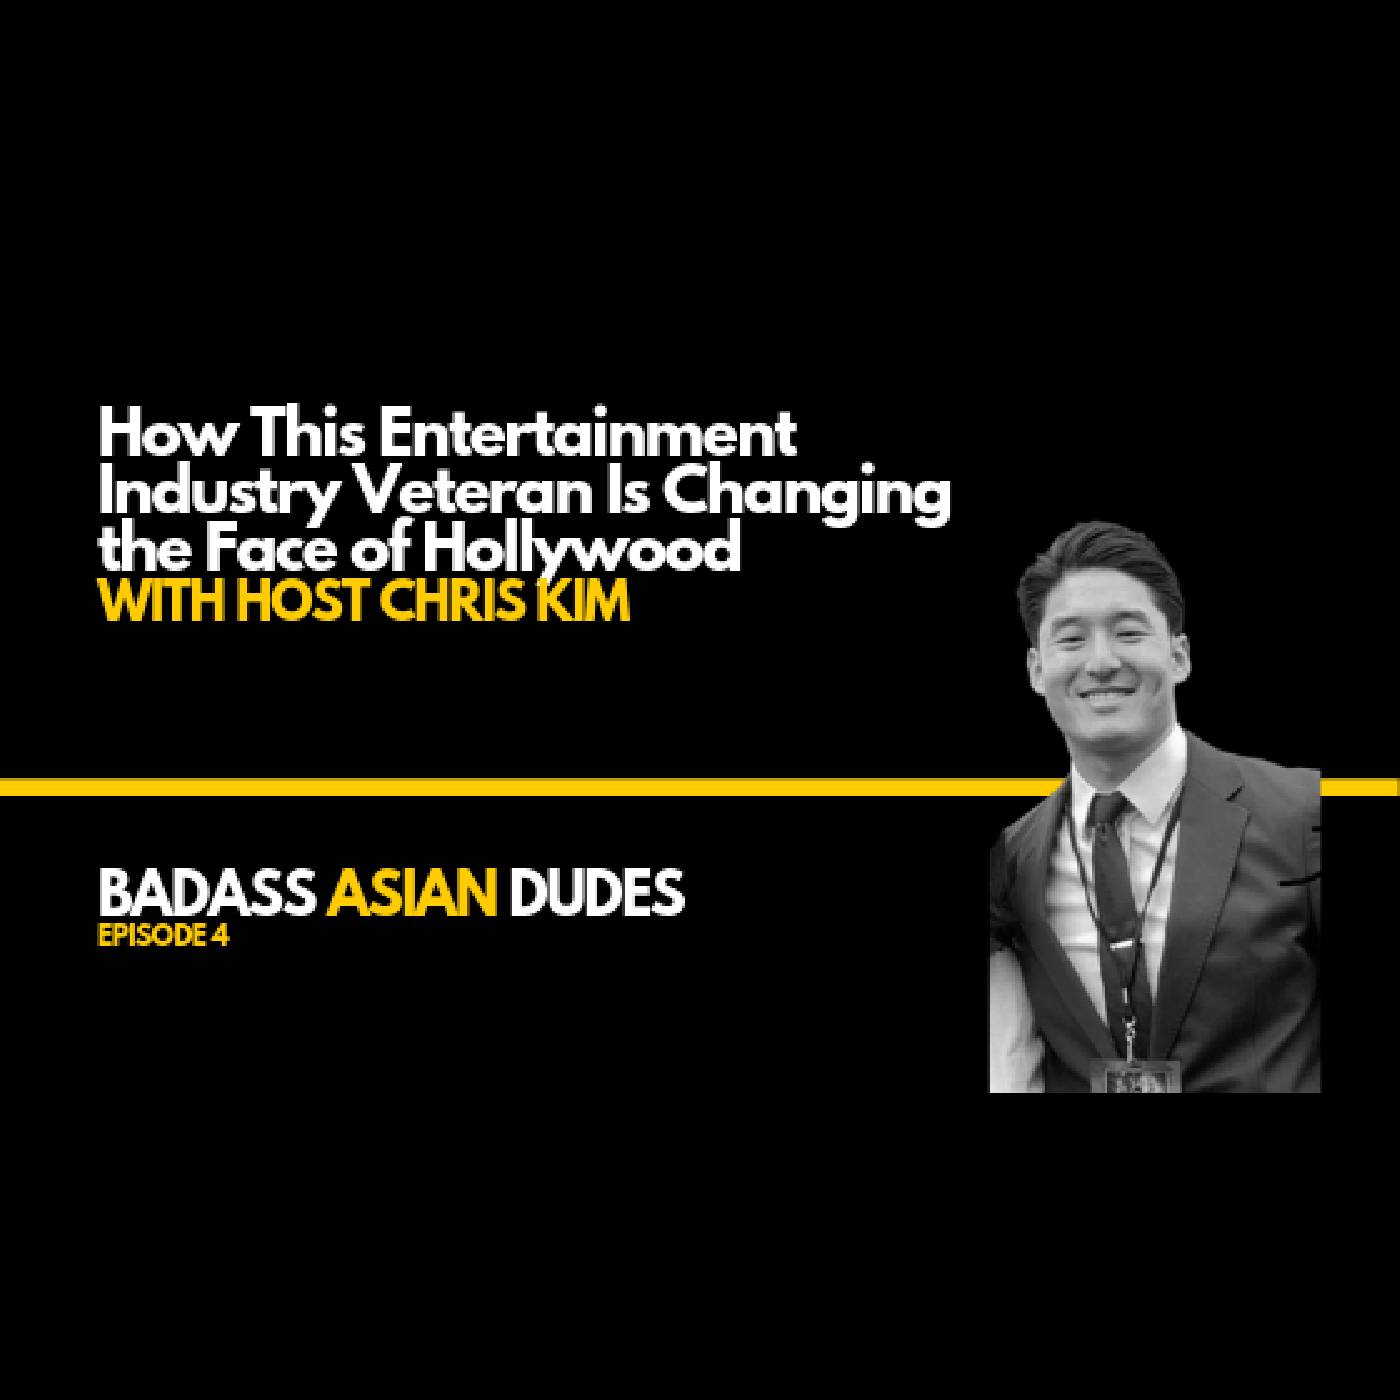 Artwork for podcast Badass Asian Dudes